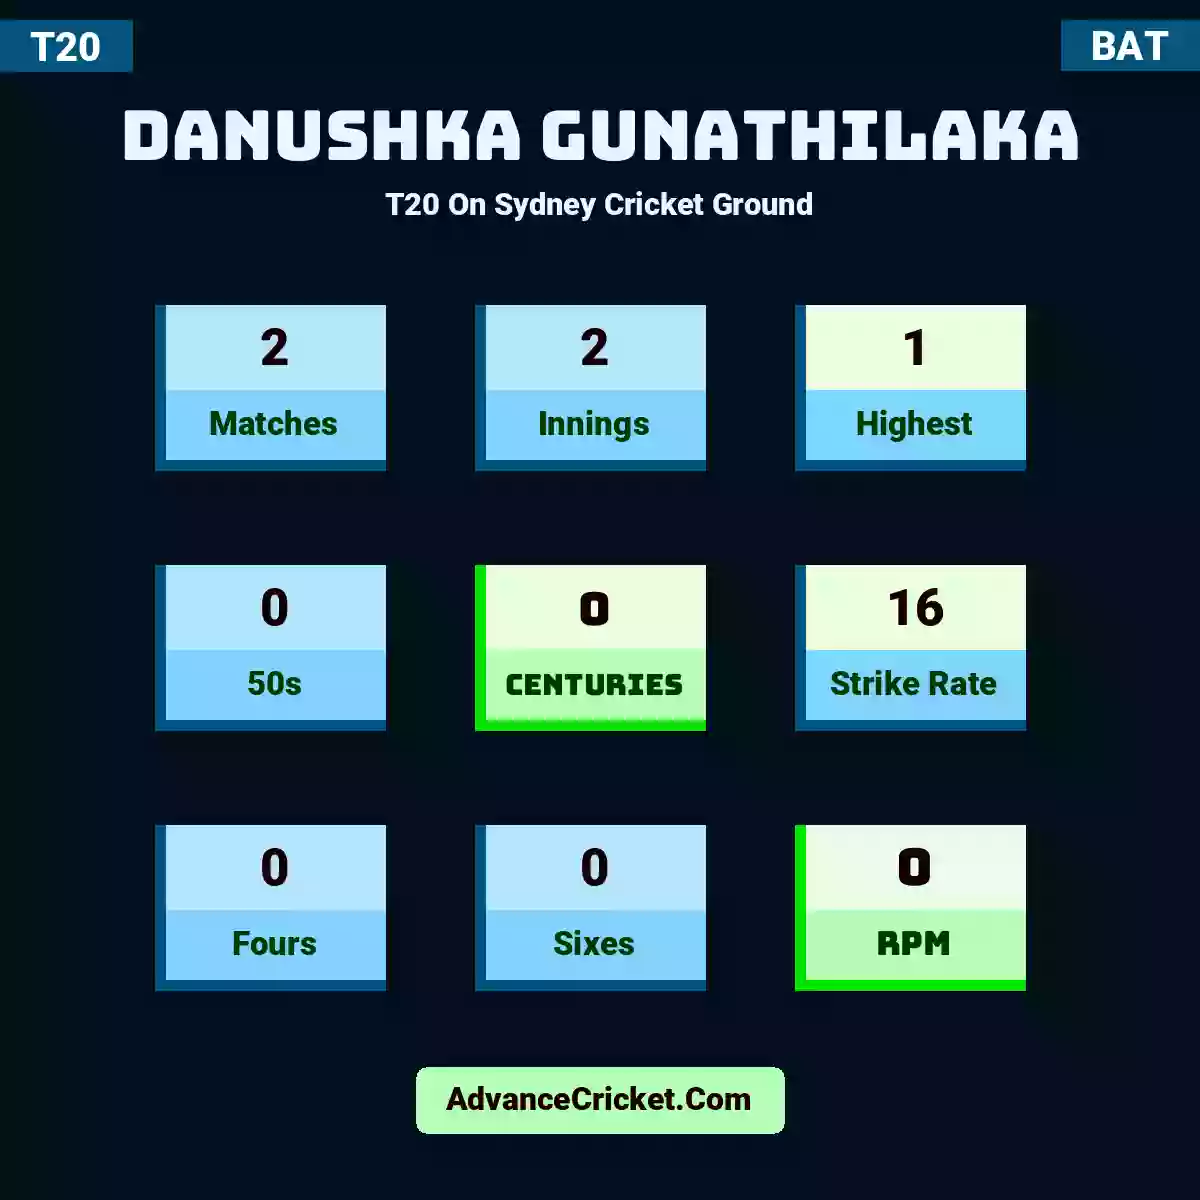 Danushka Gunathilaka T20  On Sydney Cricket Ground, Danushka Gunathilaka played 2 matches, scored 1 runs as highest, 0 half-centuries, and 0 centuries, with a strike rate of 16. D.Gunathilaka hit 0 fours and 0 sixes, with an RPM of 0.